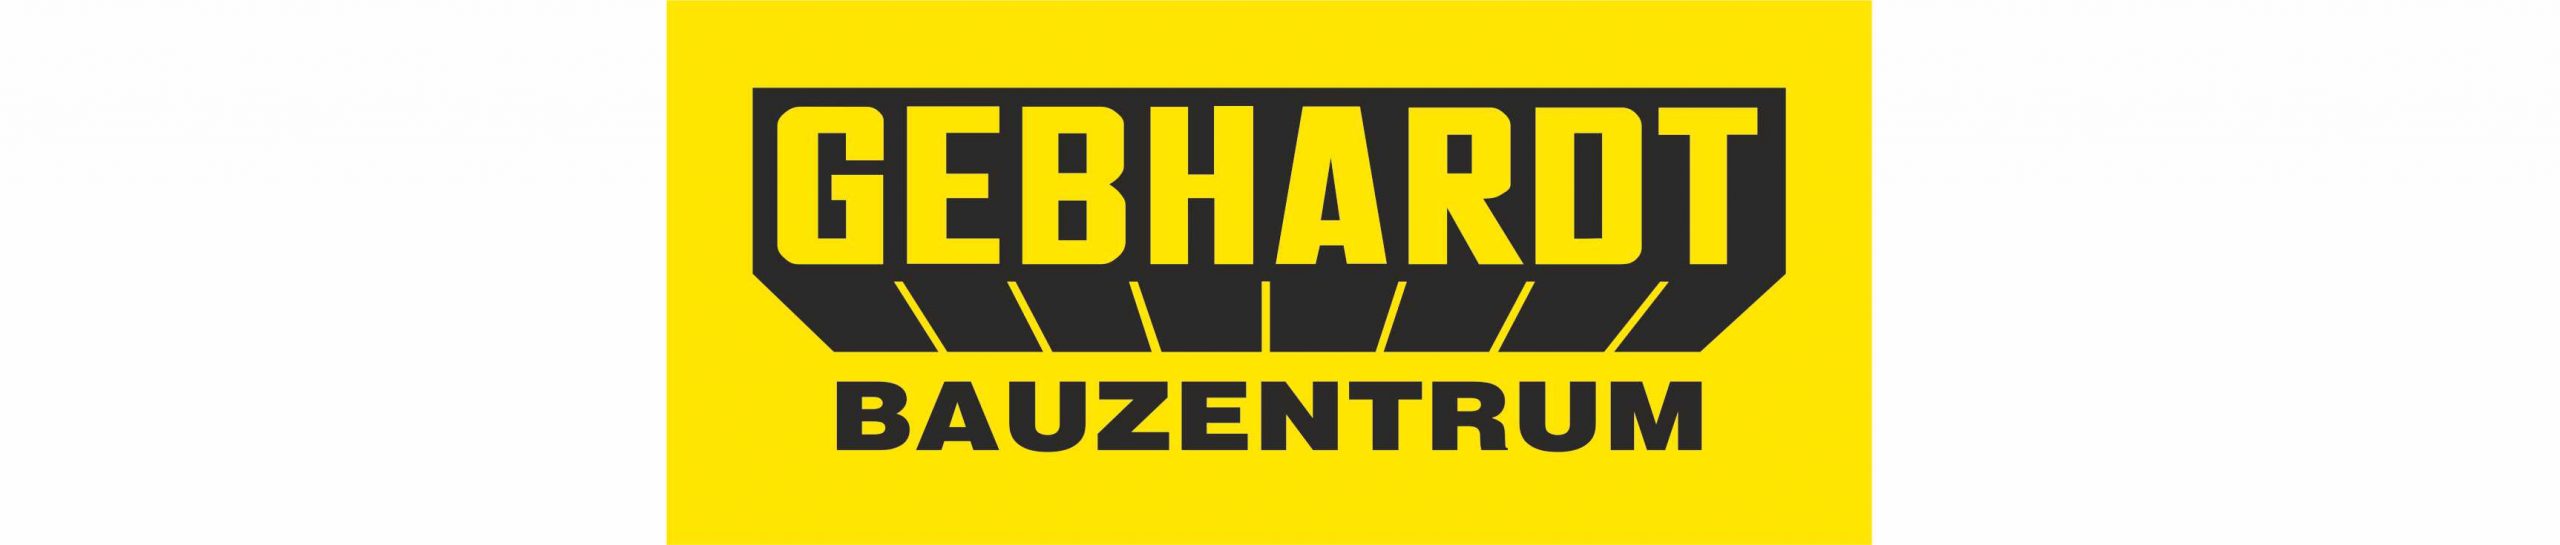 GEBHARDT BAUZENTRUM GmbH & Co. KG - Goldbach